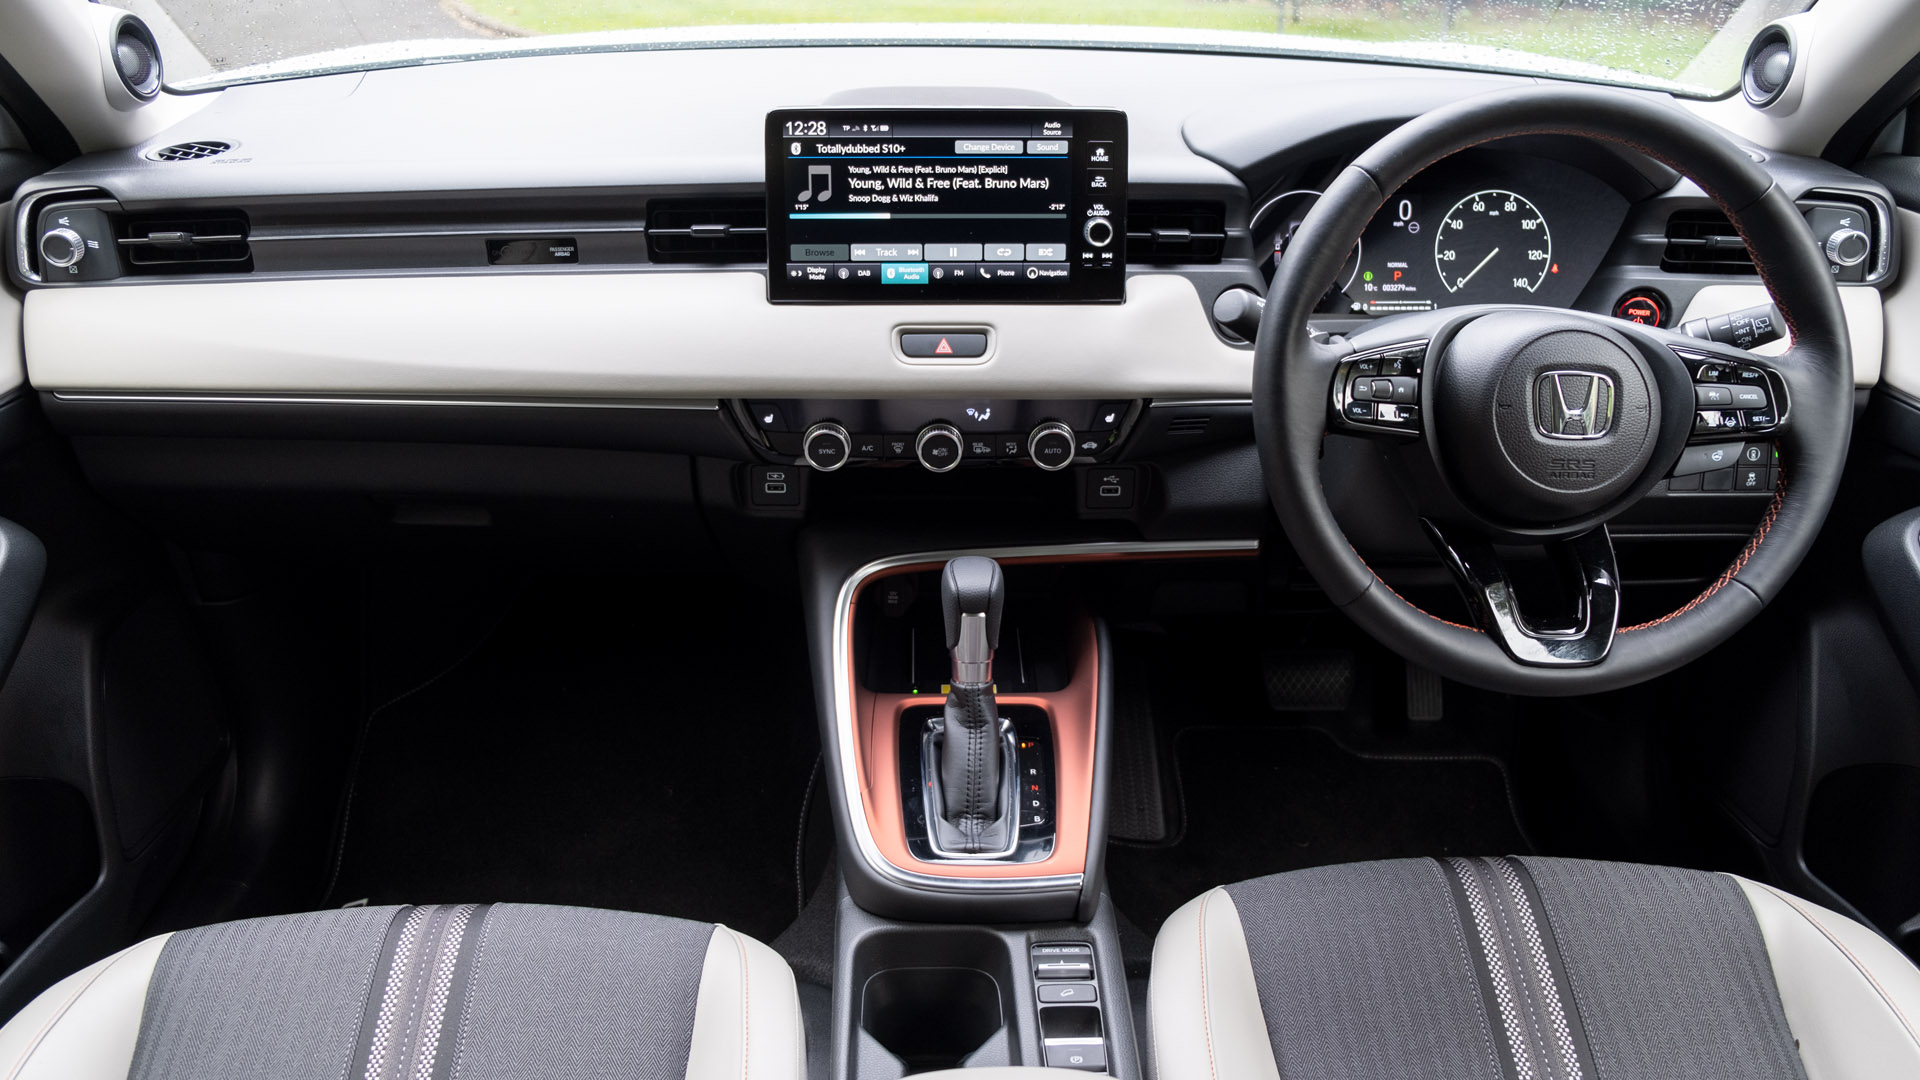 Honda HR-V interior space